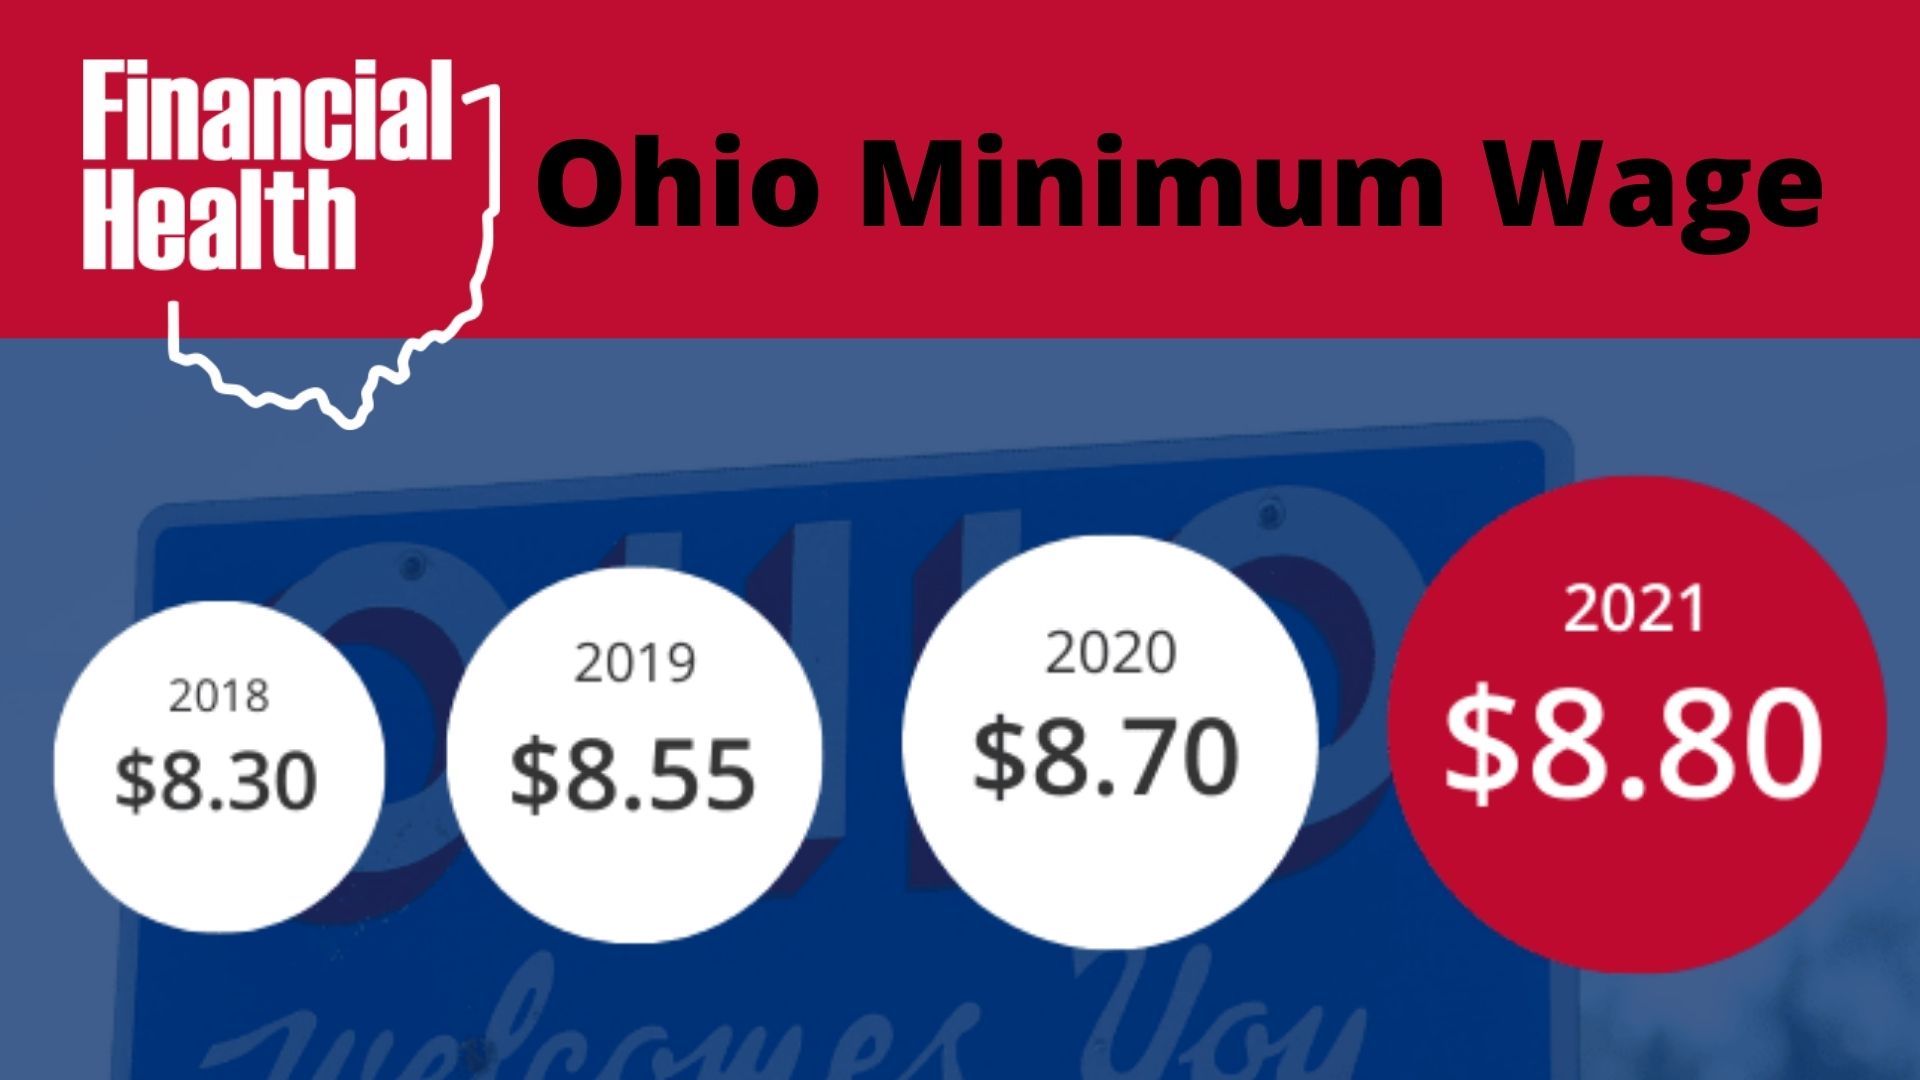 Ohio Minimum Wage Financial Health of Ohio Residents